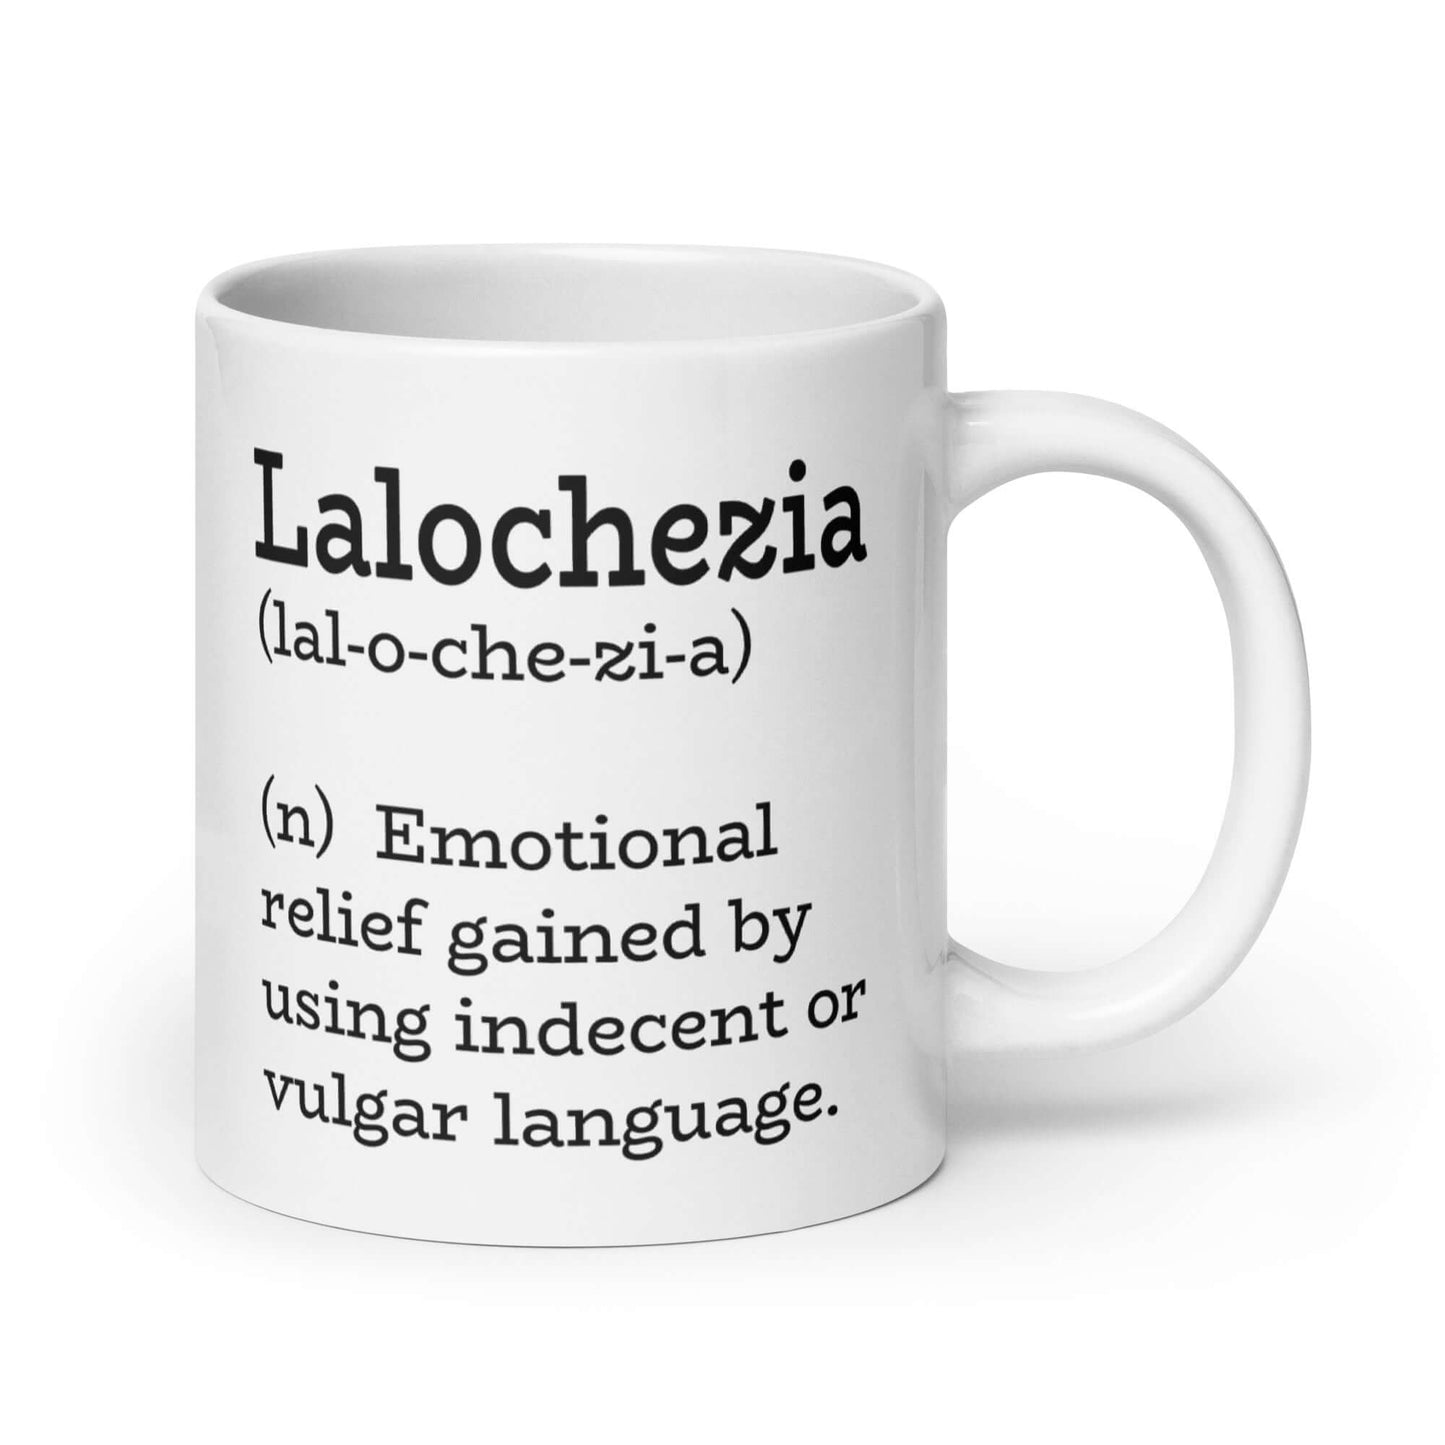 Lalochezia rare word definition mug.